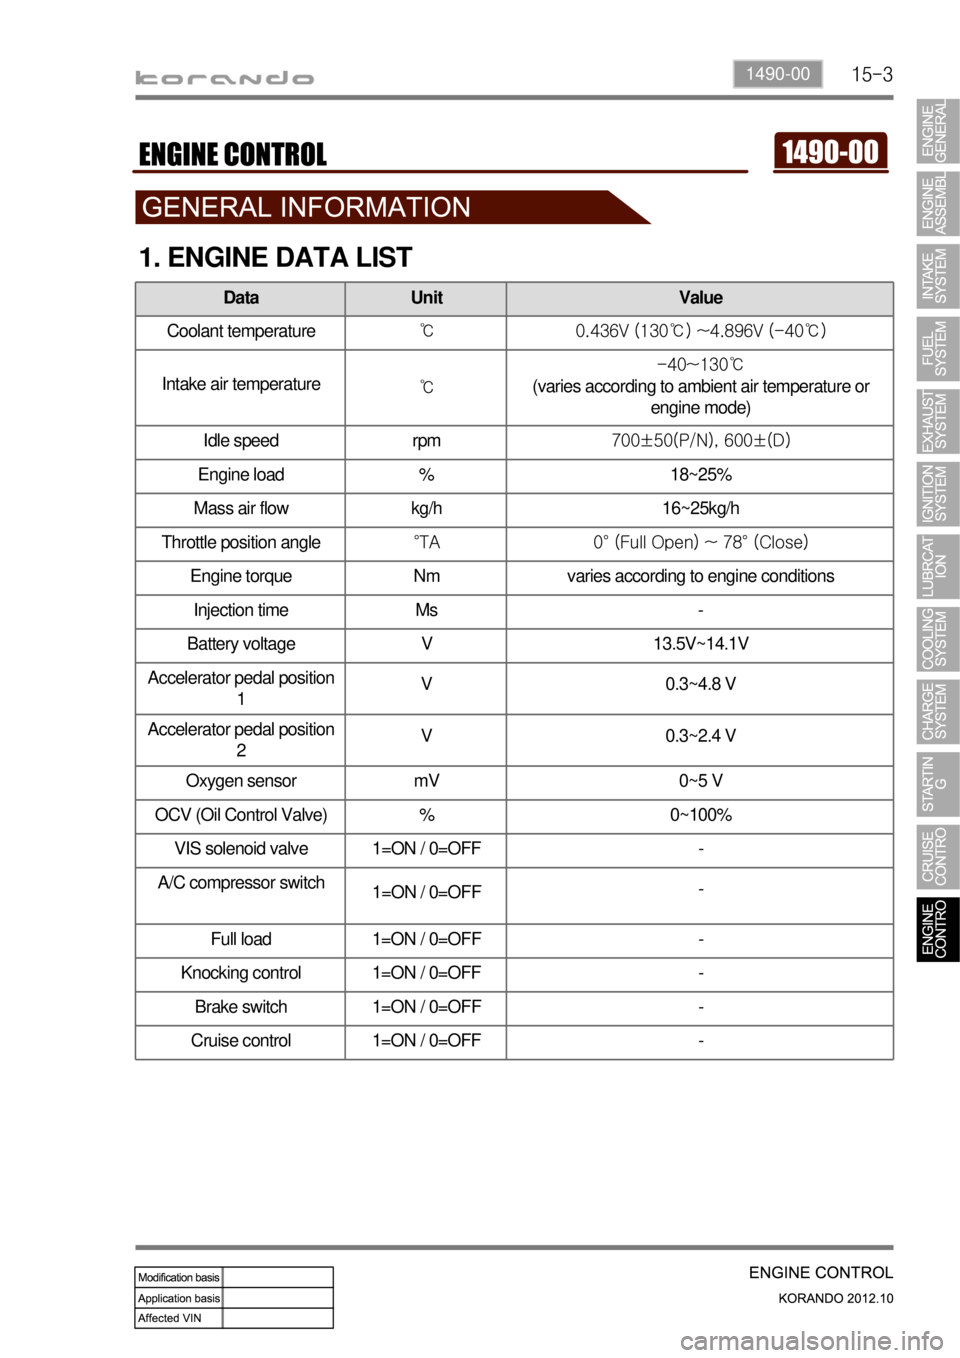 SSANGYONG KORANDO 2012  Service Manual 15-31490-00
1. ENGINE DATA LIST
Data Unit Value
Coolant temperature℃ 0.436V (130℃) ~4.896V (-40℃)
Intake air temperature
℃-40~130℃
(varies according to ambient air temperature or 
engine mod